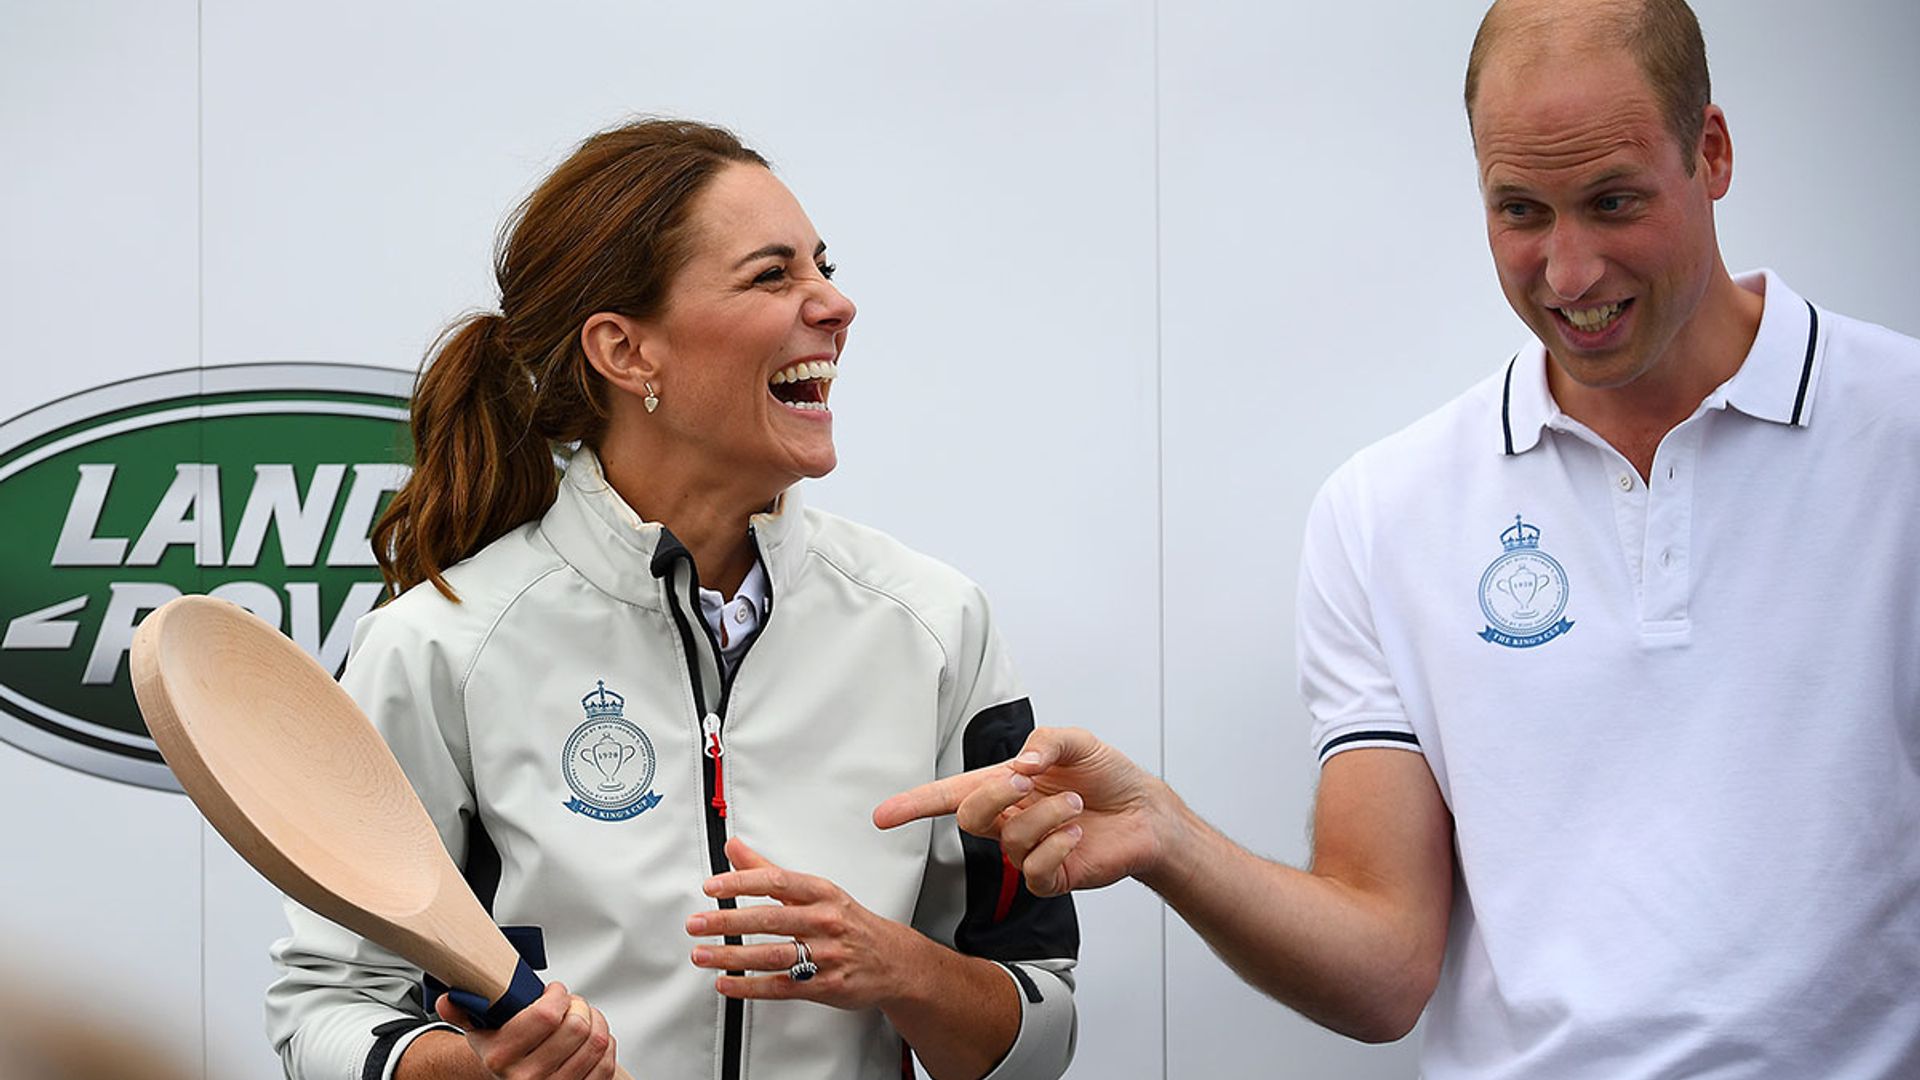 Kate Middleton's hilarious reaction to Prince William's marathon plans is everything